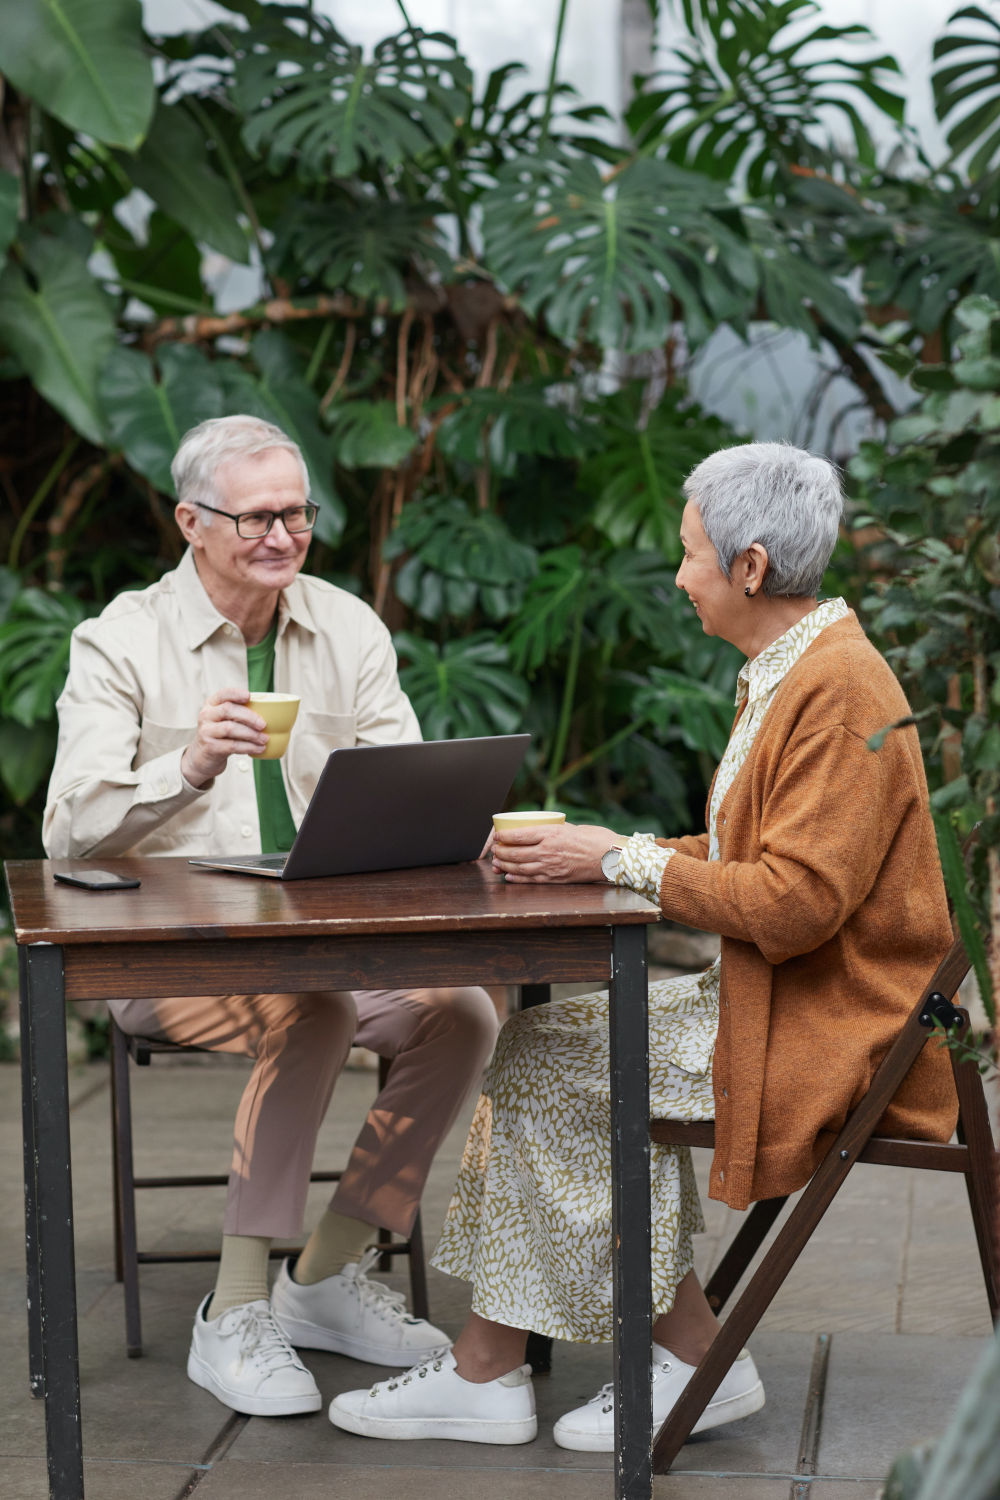 Elderly couple with Parkinson's Disease